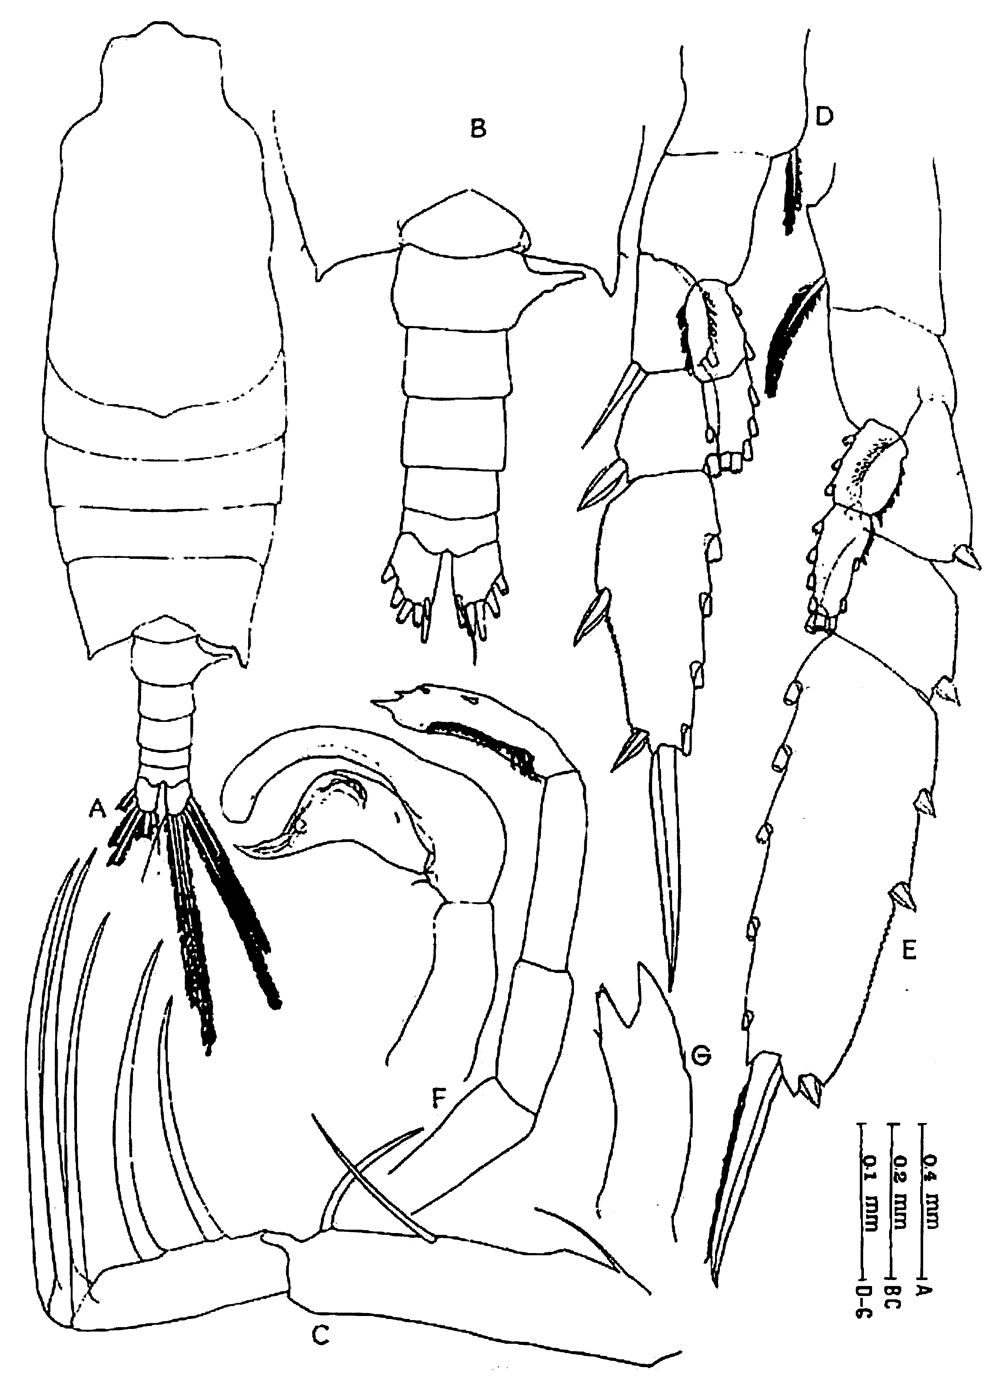 Species Candacia tenuimana - Plate 10 of morphological figures